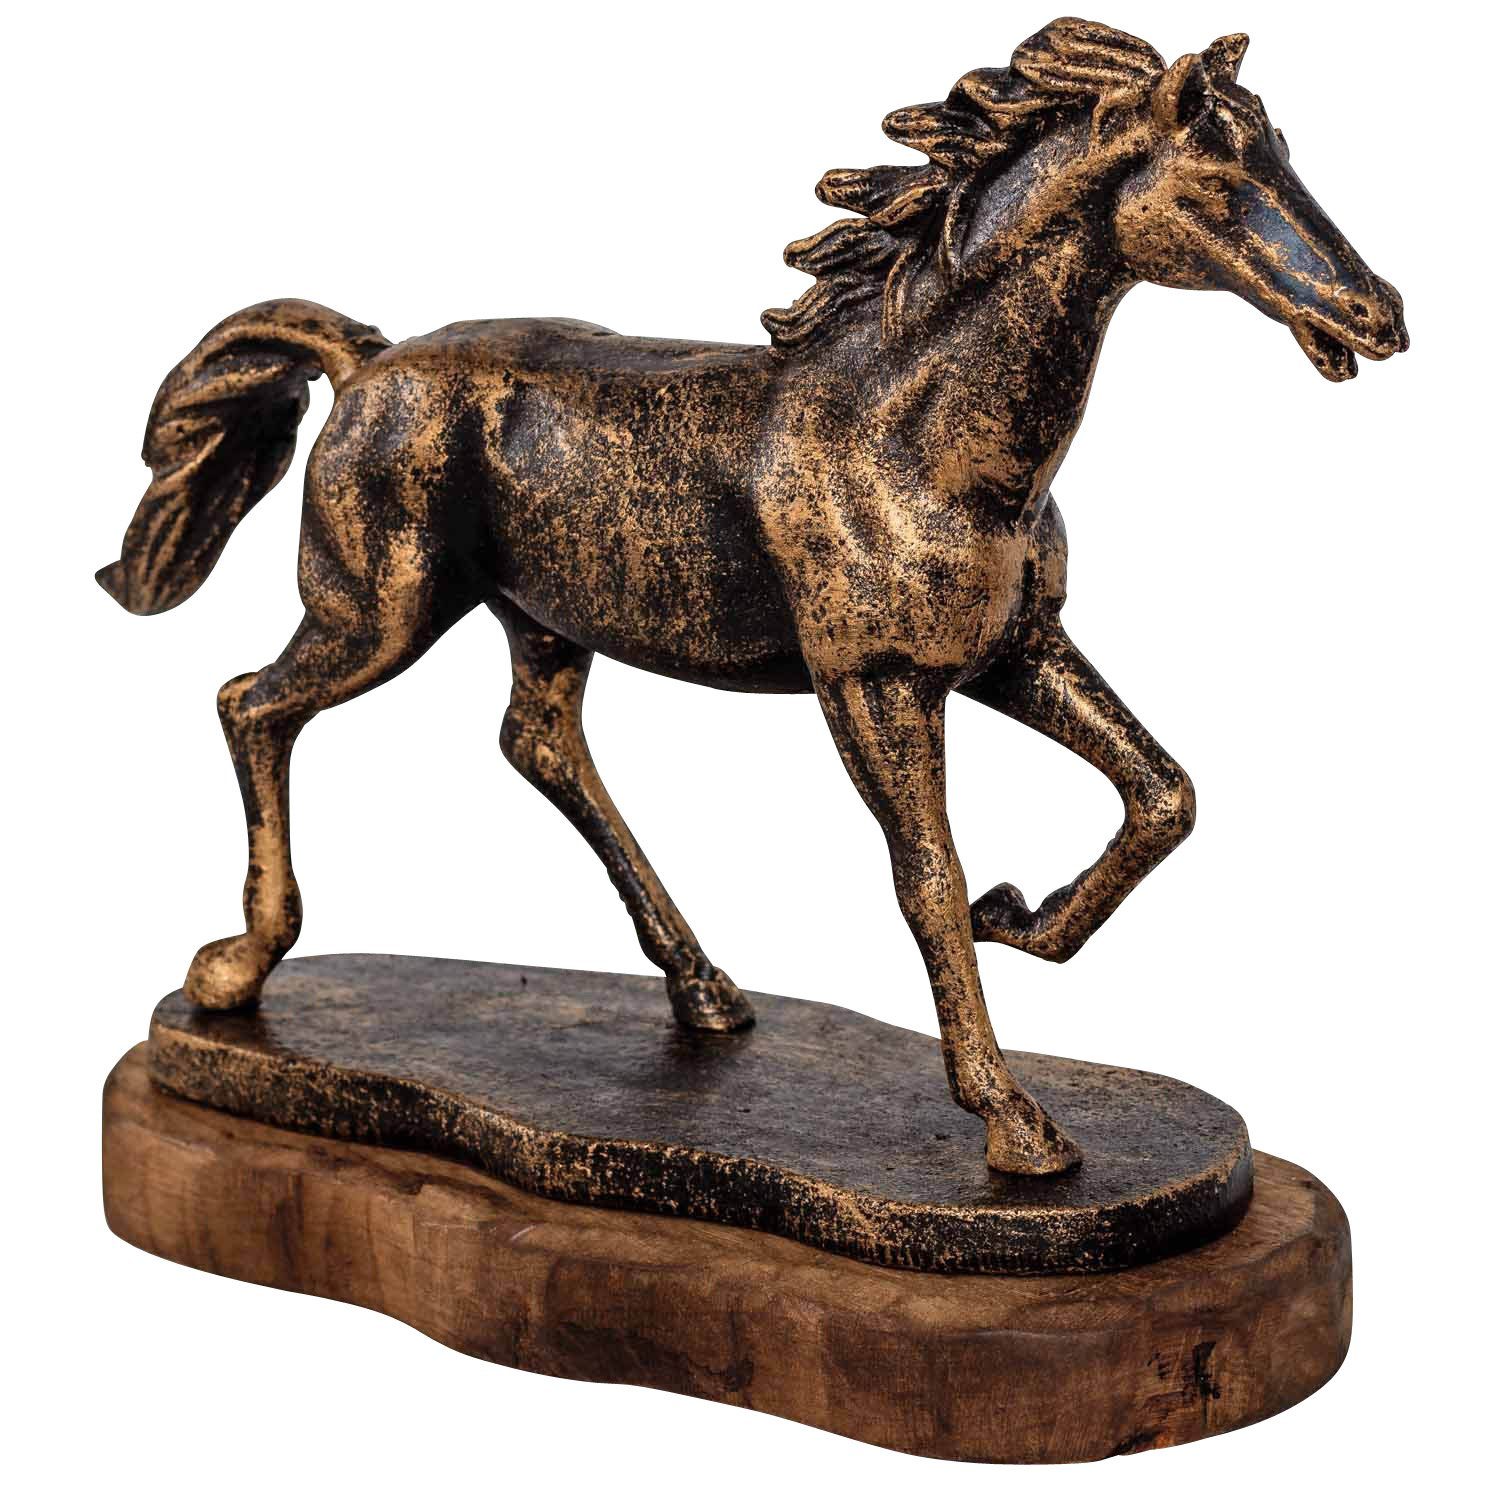 Aubaho Dekofigur Eisenfigur Pferd Tier Figur Skulptur Eisen Antik-Stil 24cm